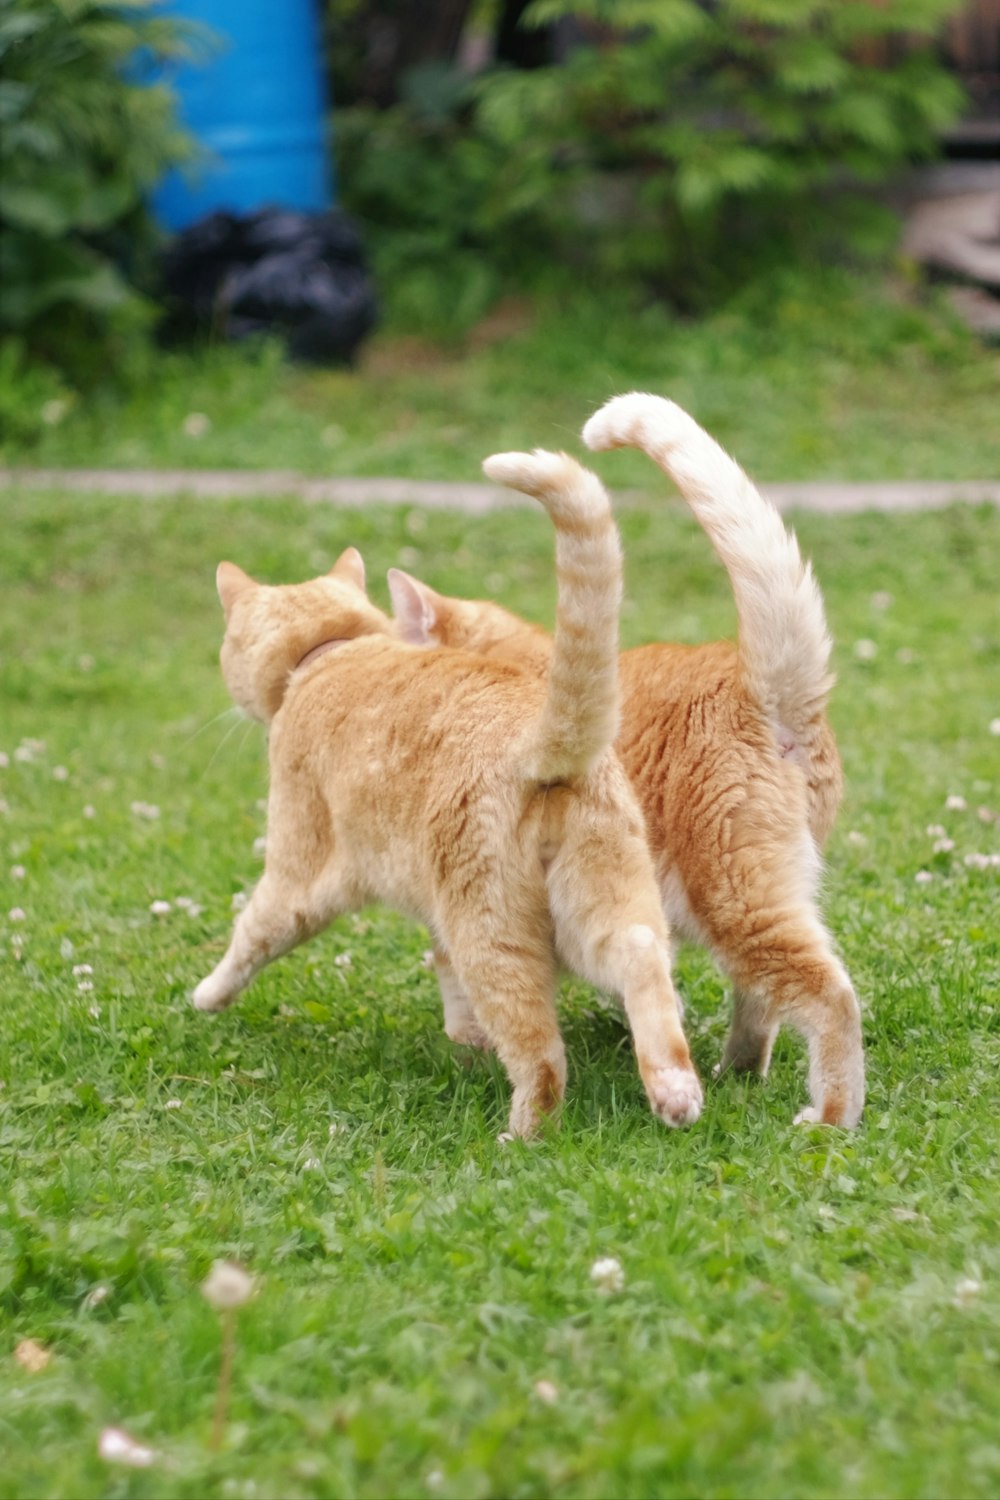 orange tabby cat walking on green grass field during daytime